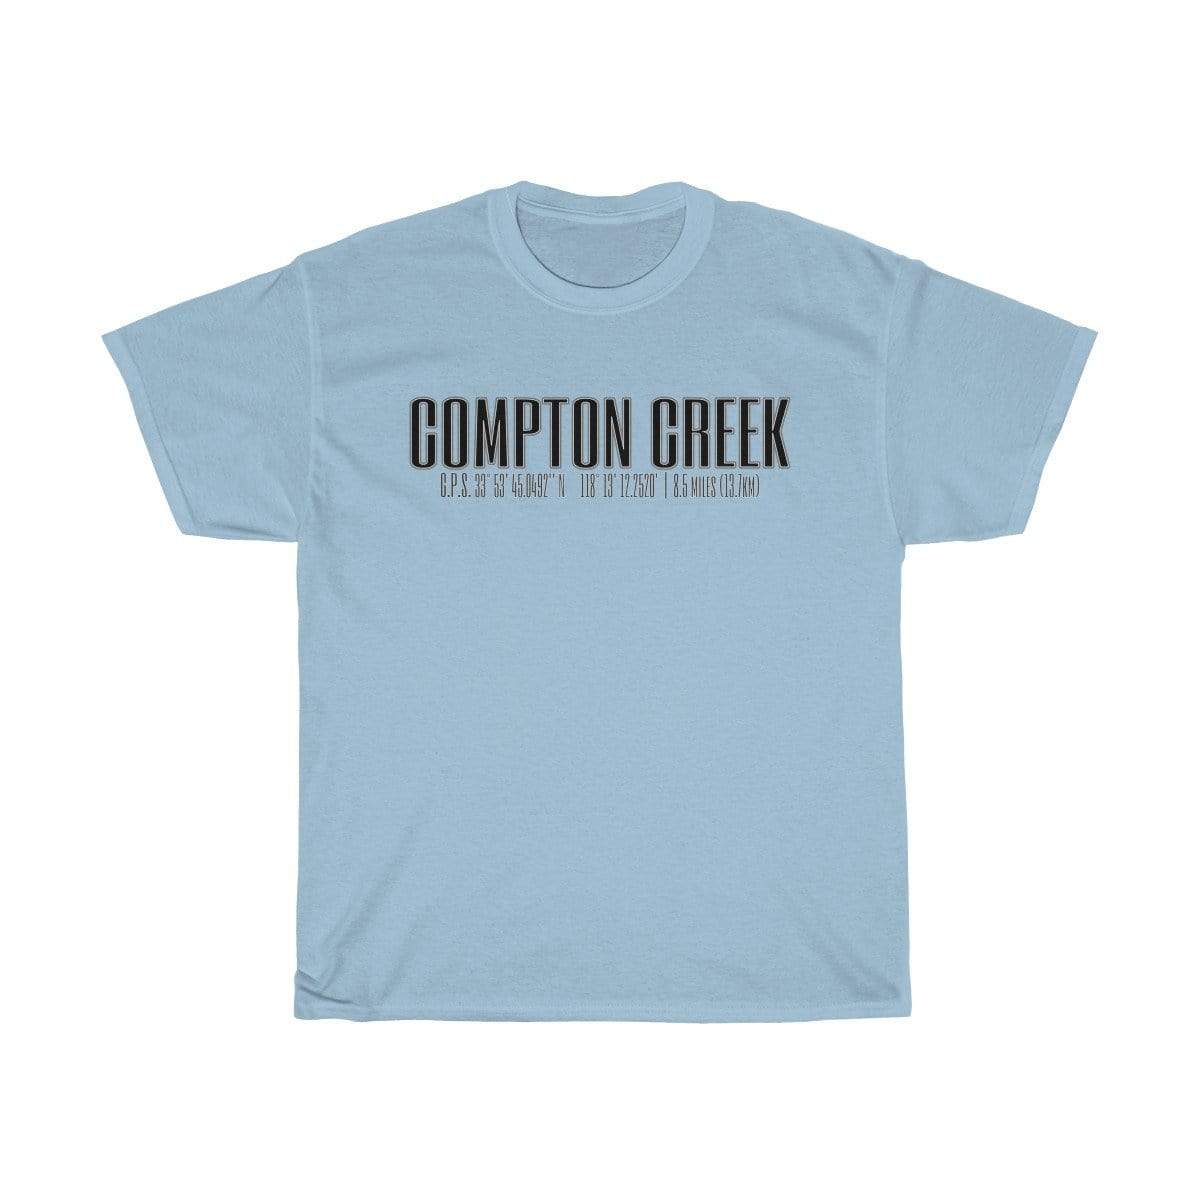 Plumskum T-Shirt Light Blue / S The Compton Creek GPS T-Shirt